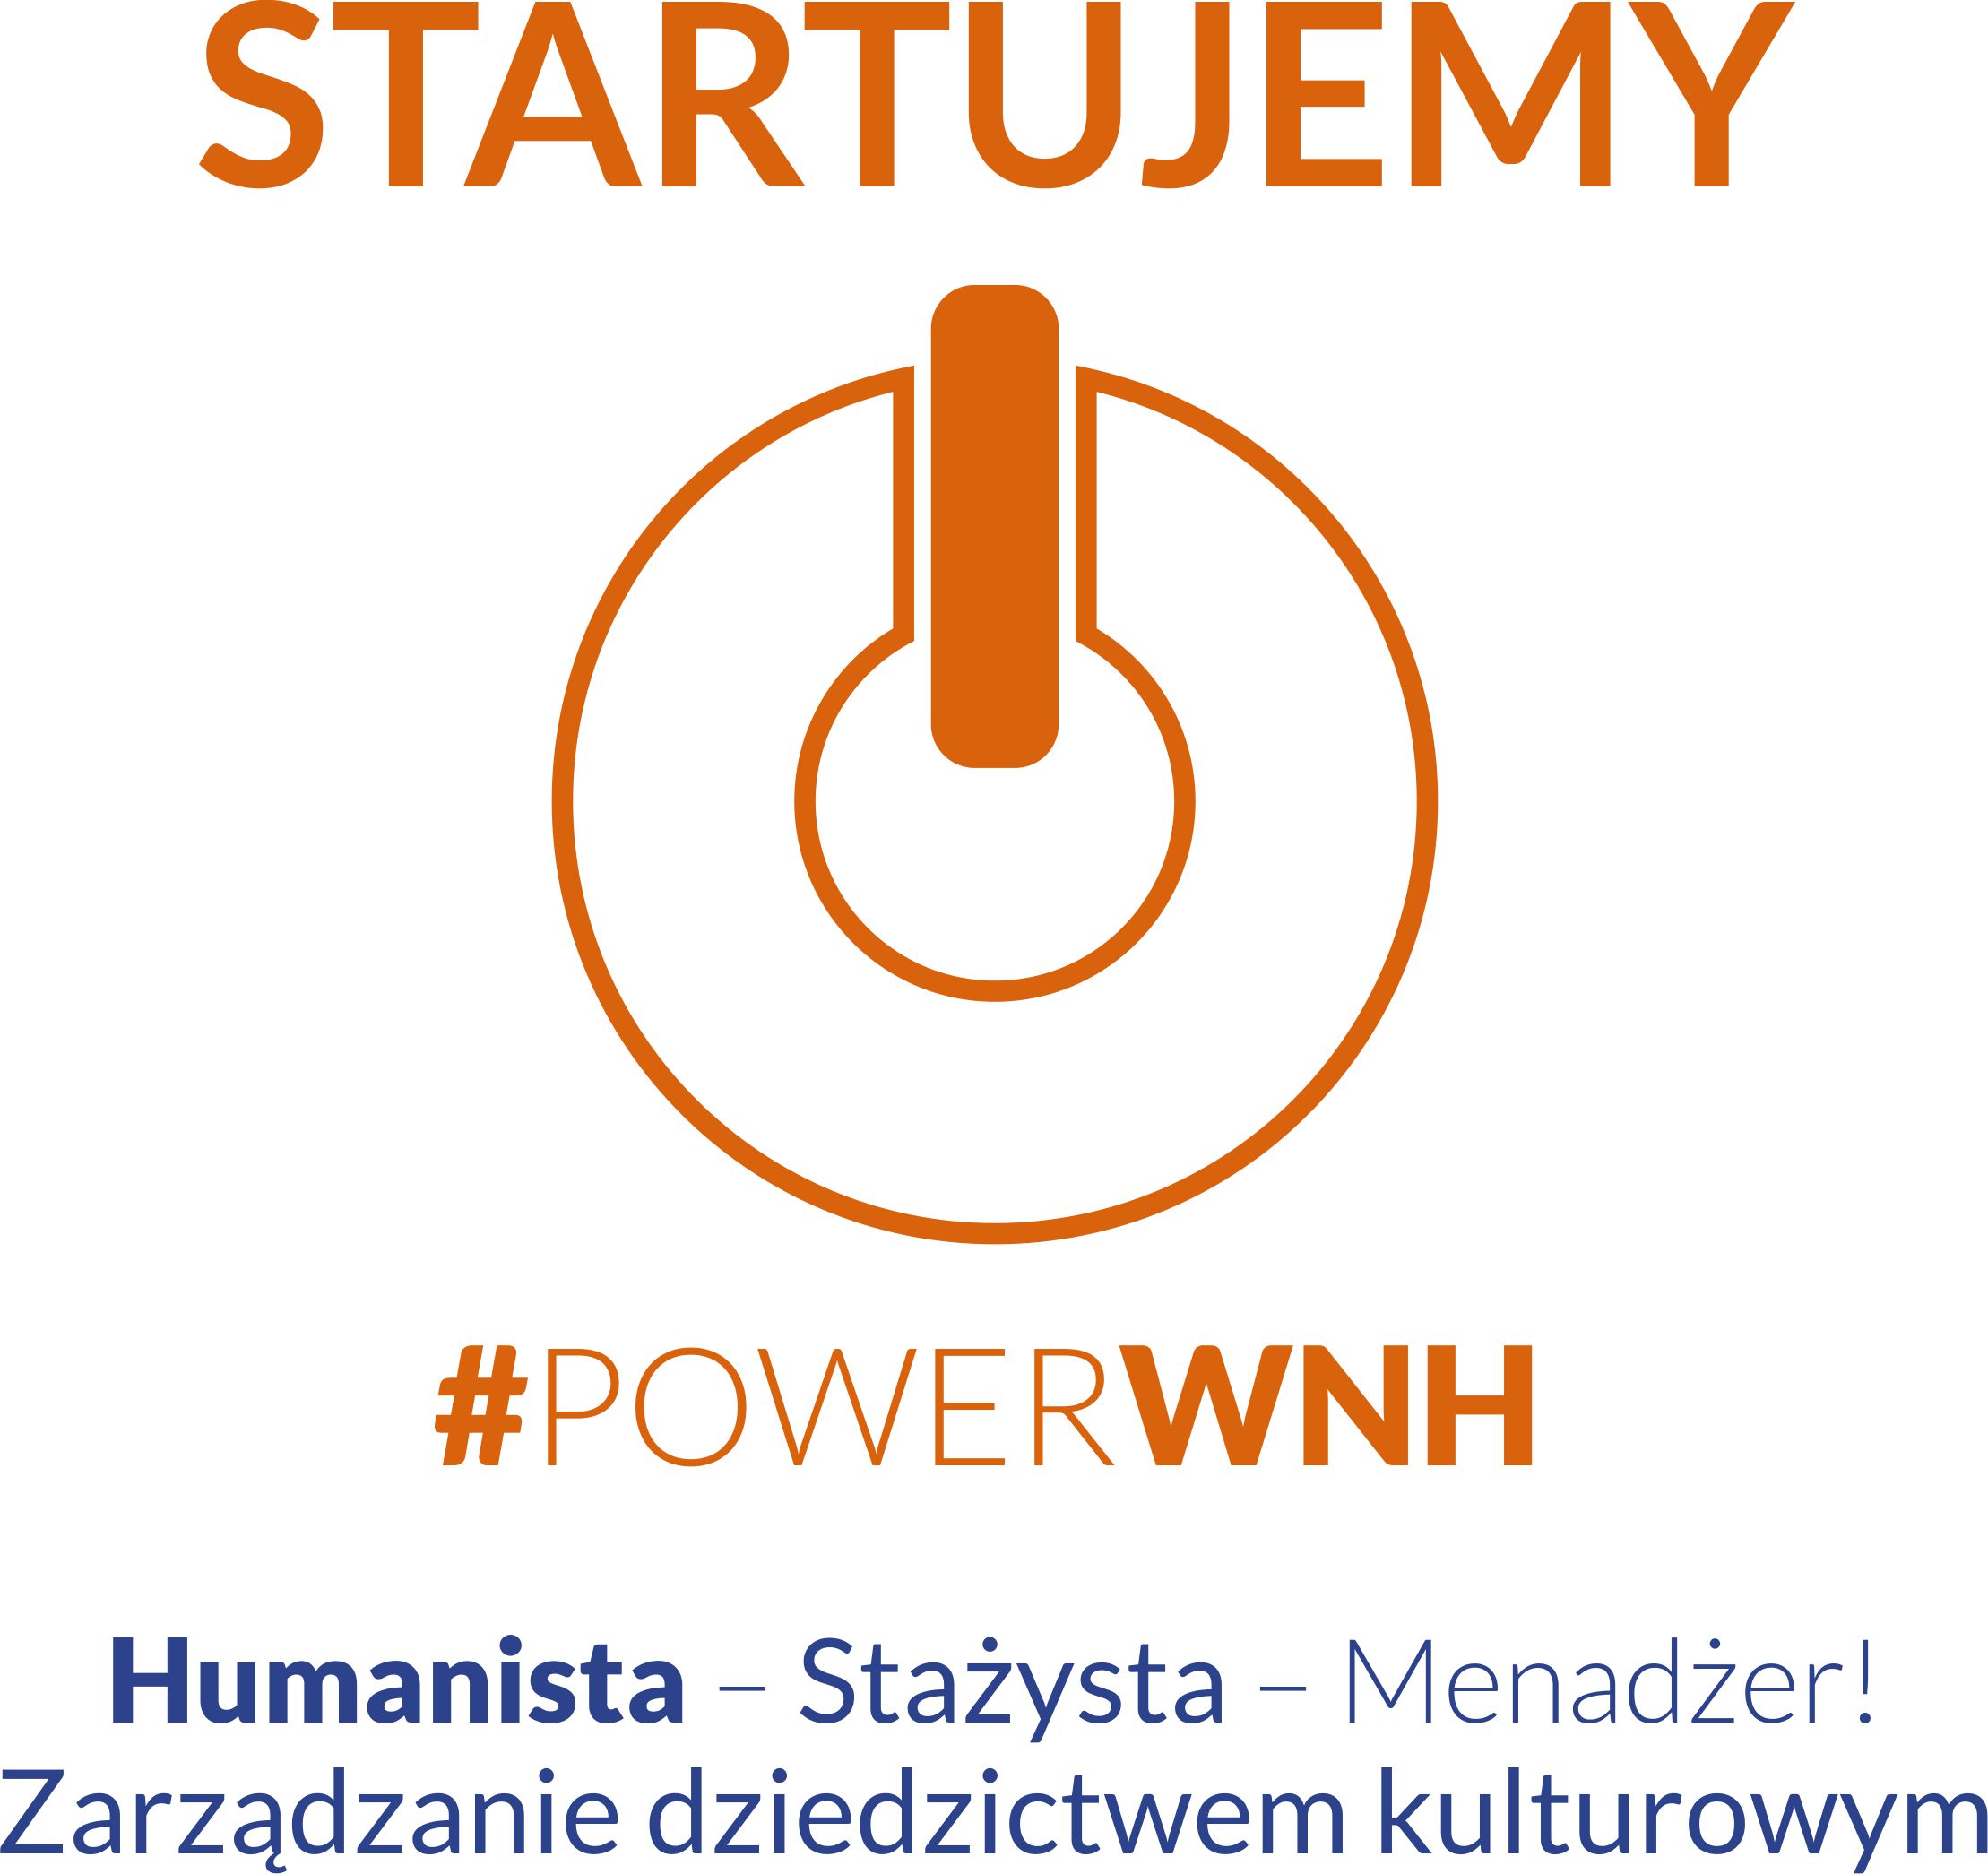 POWER_WNH - start.jpg